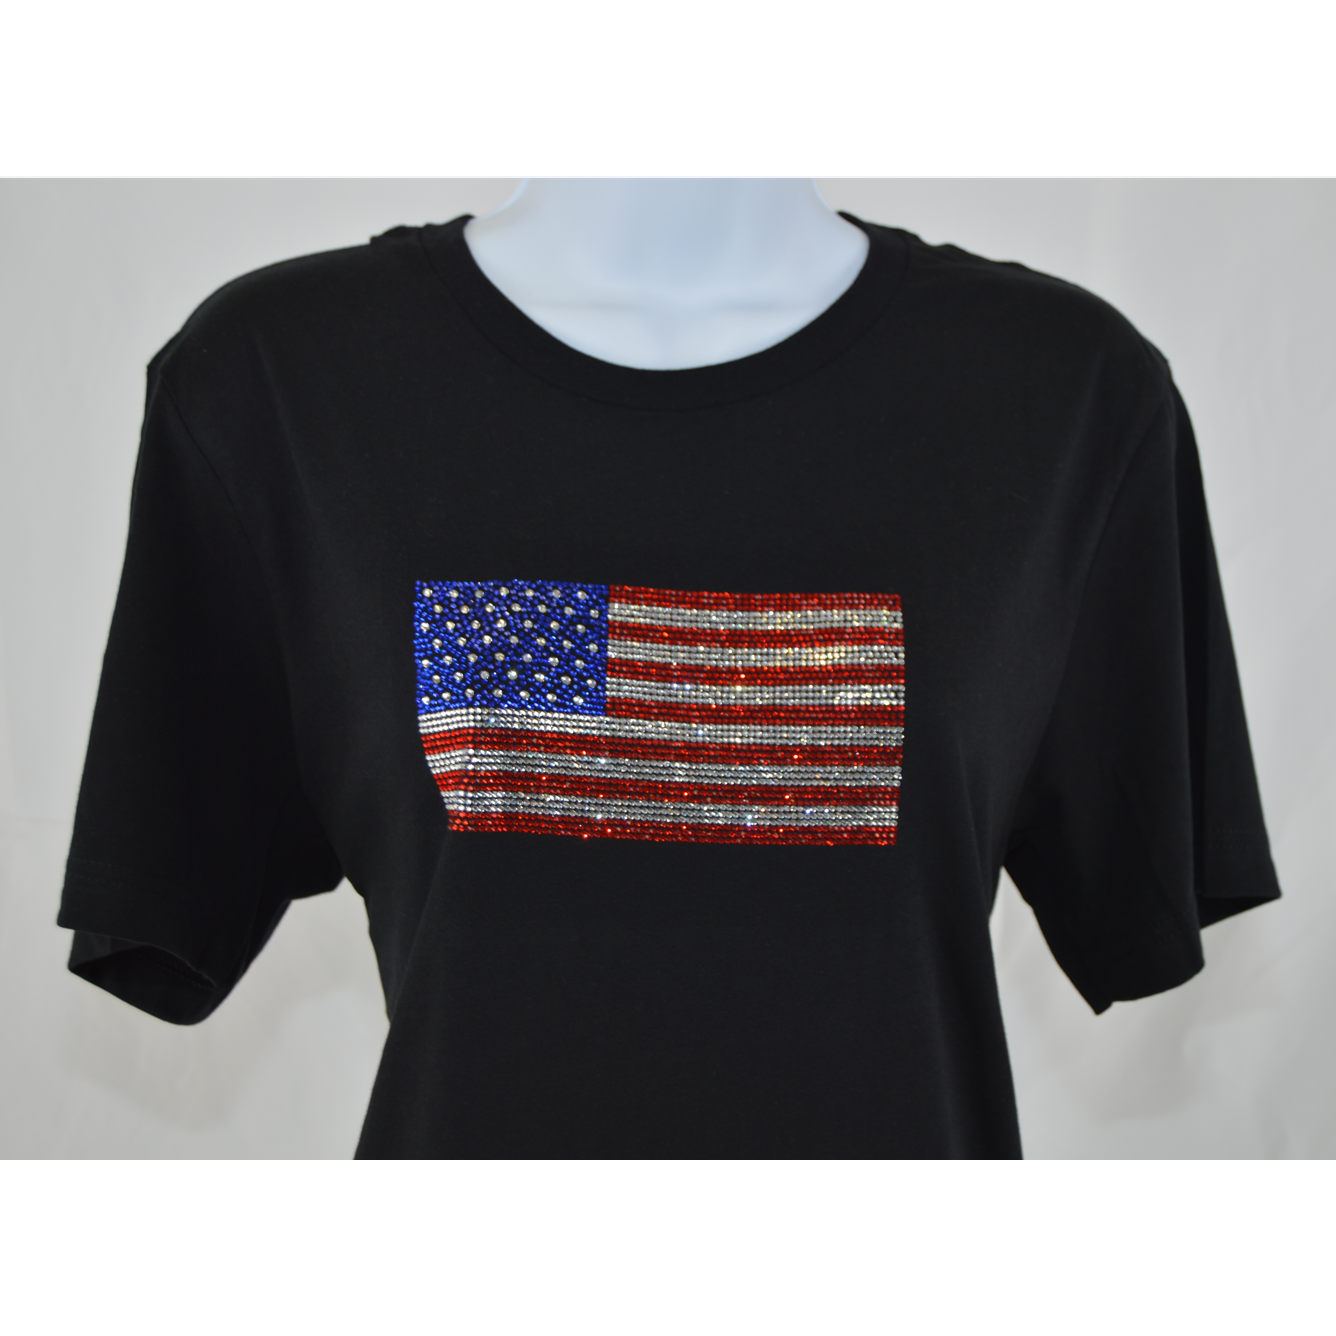 American flag rhinestone shirt hoodie on mannequin close up